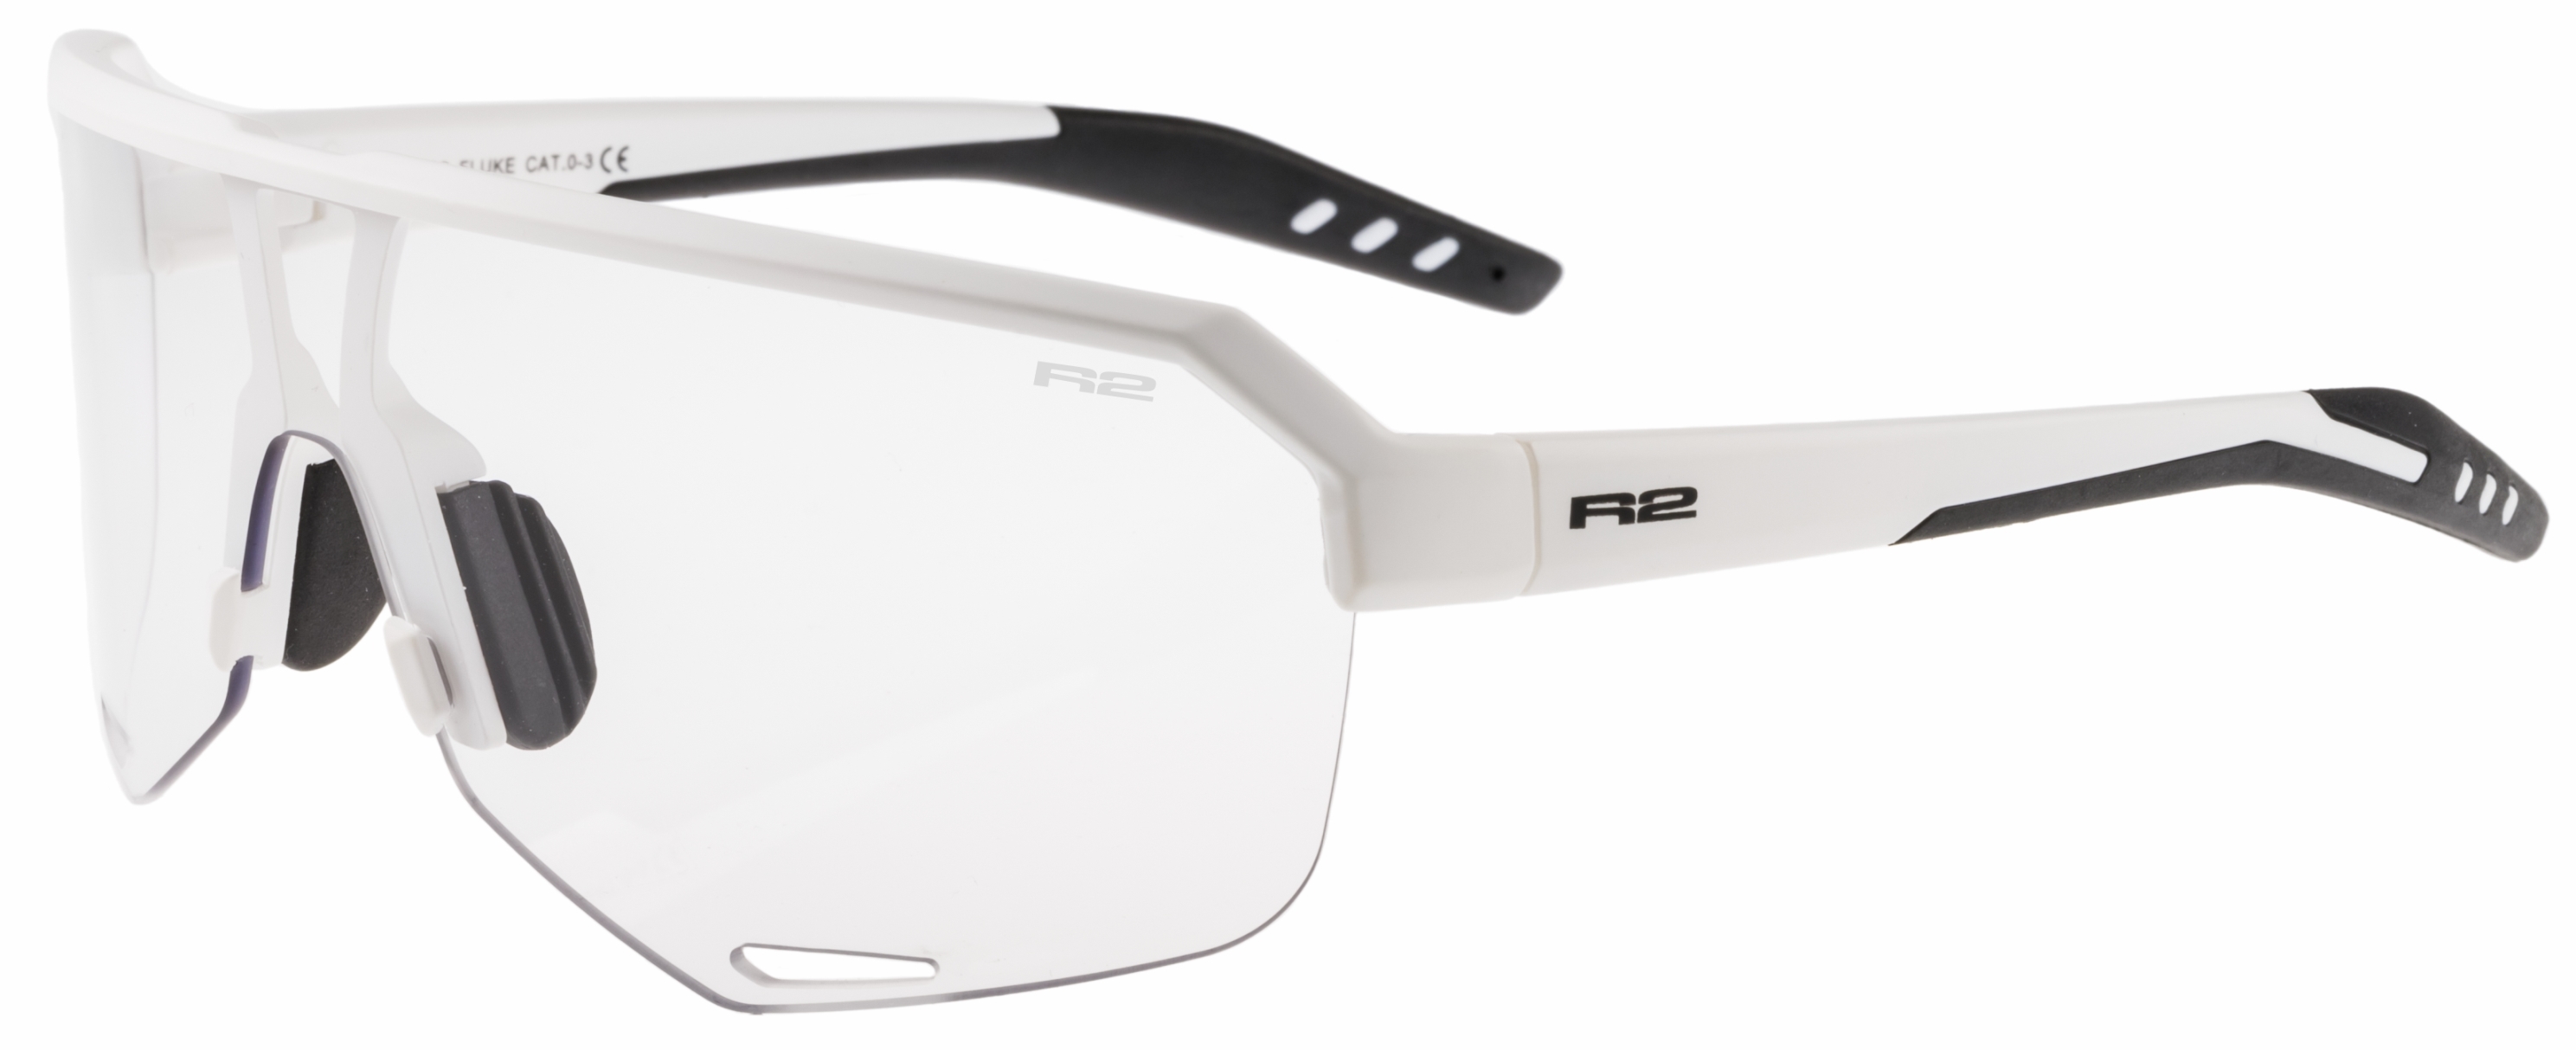 Photochromatic sunglasses  R2 FLUKE AT100S